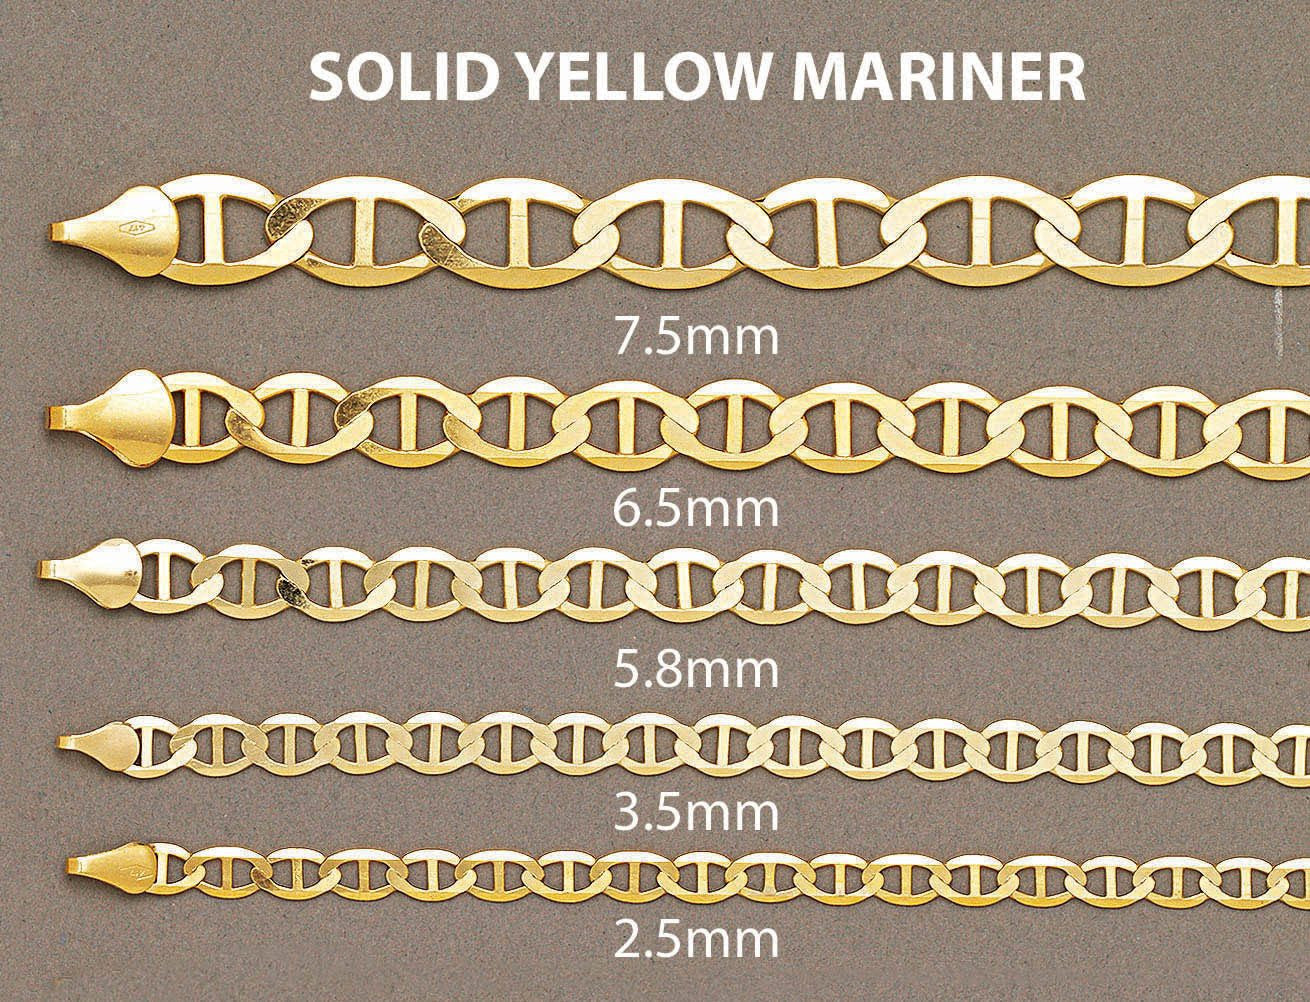 10k Yellow Solid Mariner Bracelet